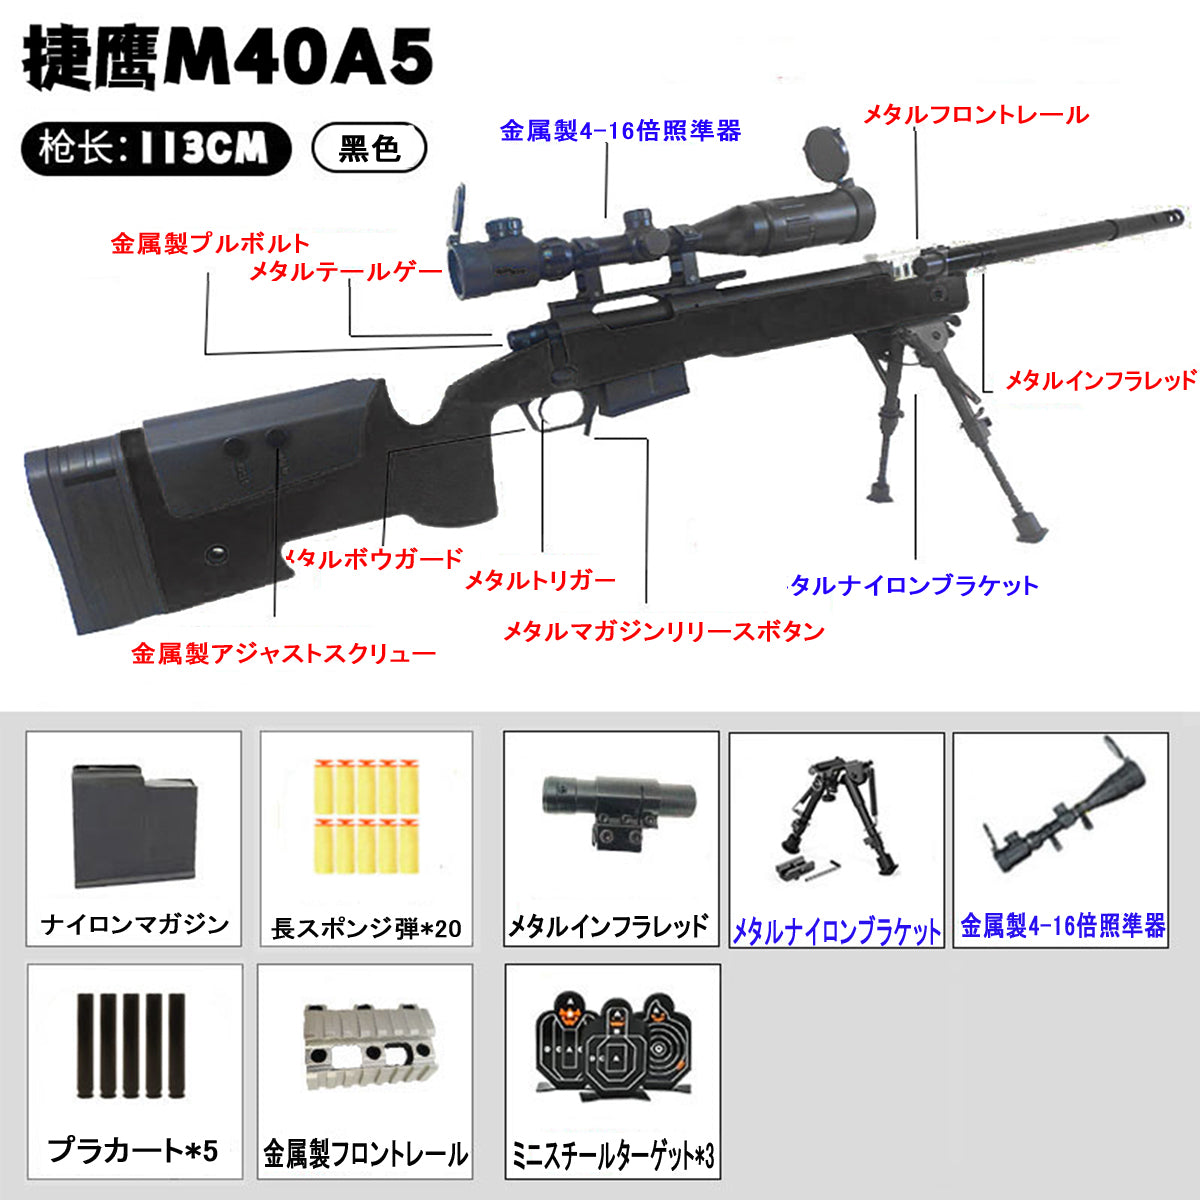 M40A5 JY sniper gun-style toy gun, shell-exhausting sniper rifle, bolt-action bullpup rifle